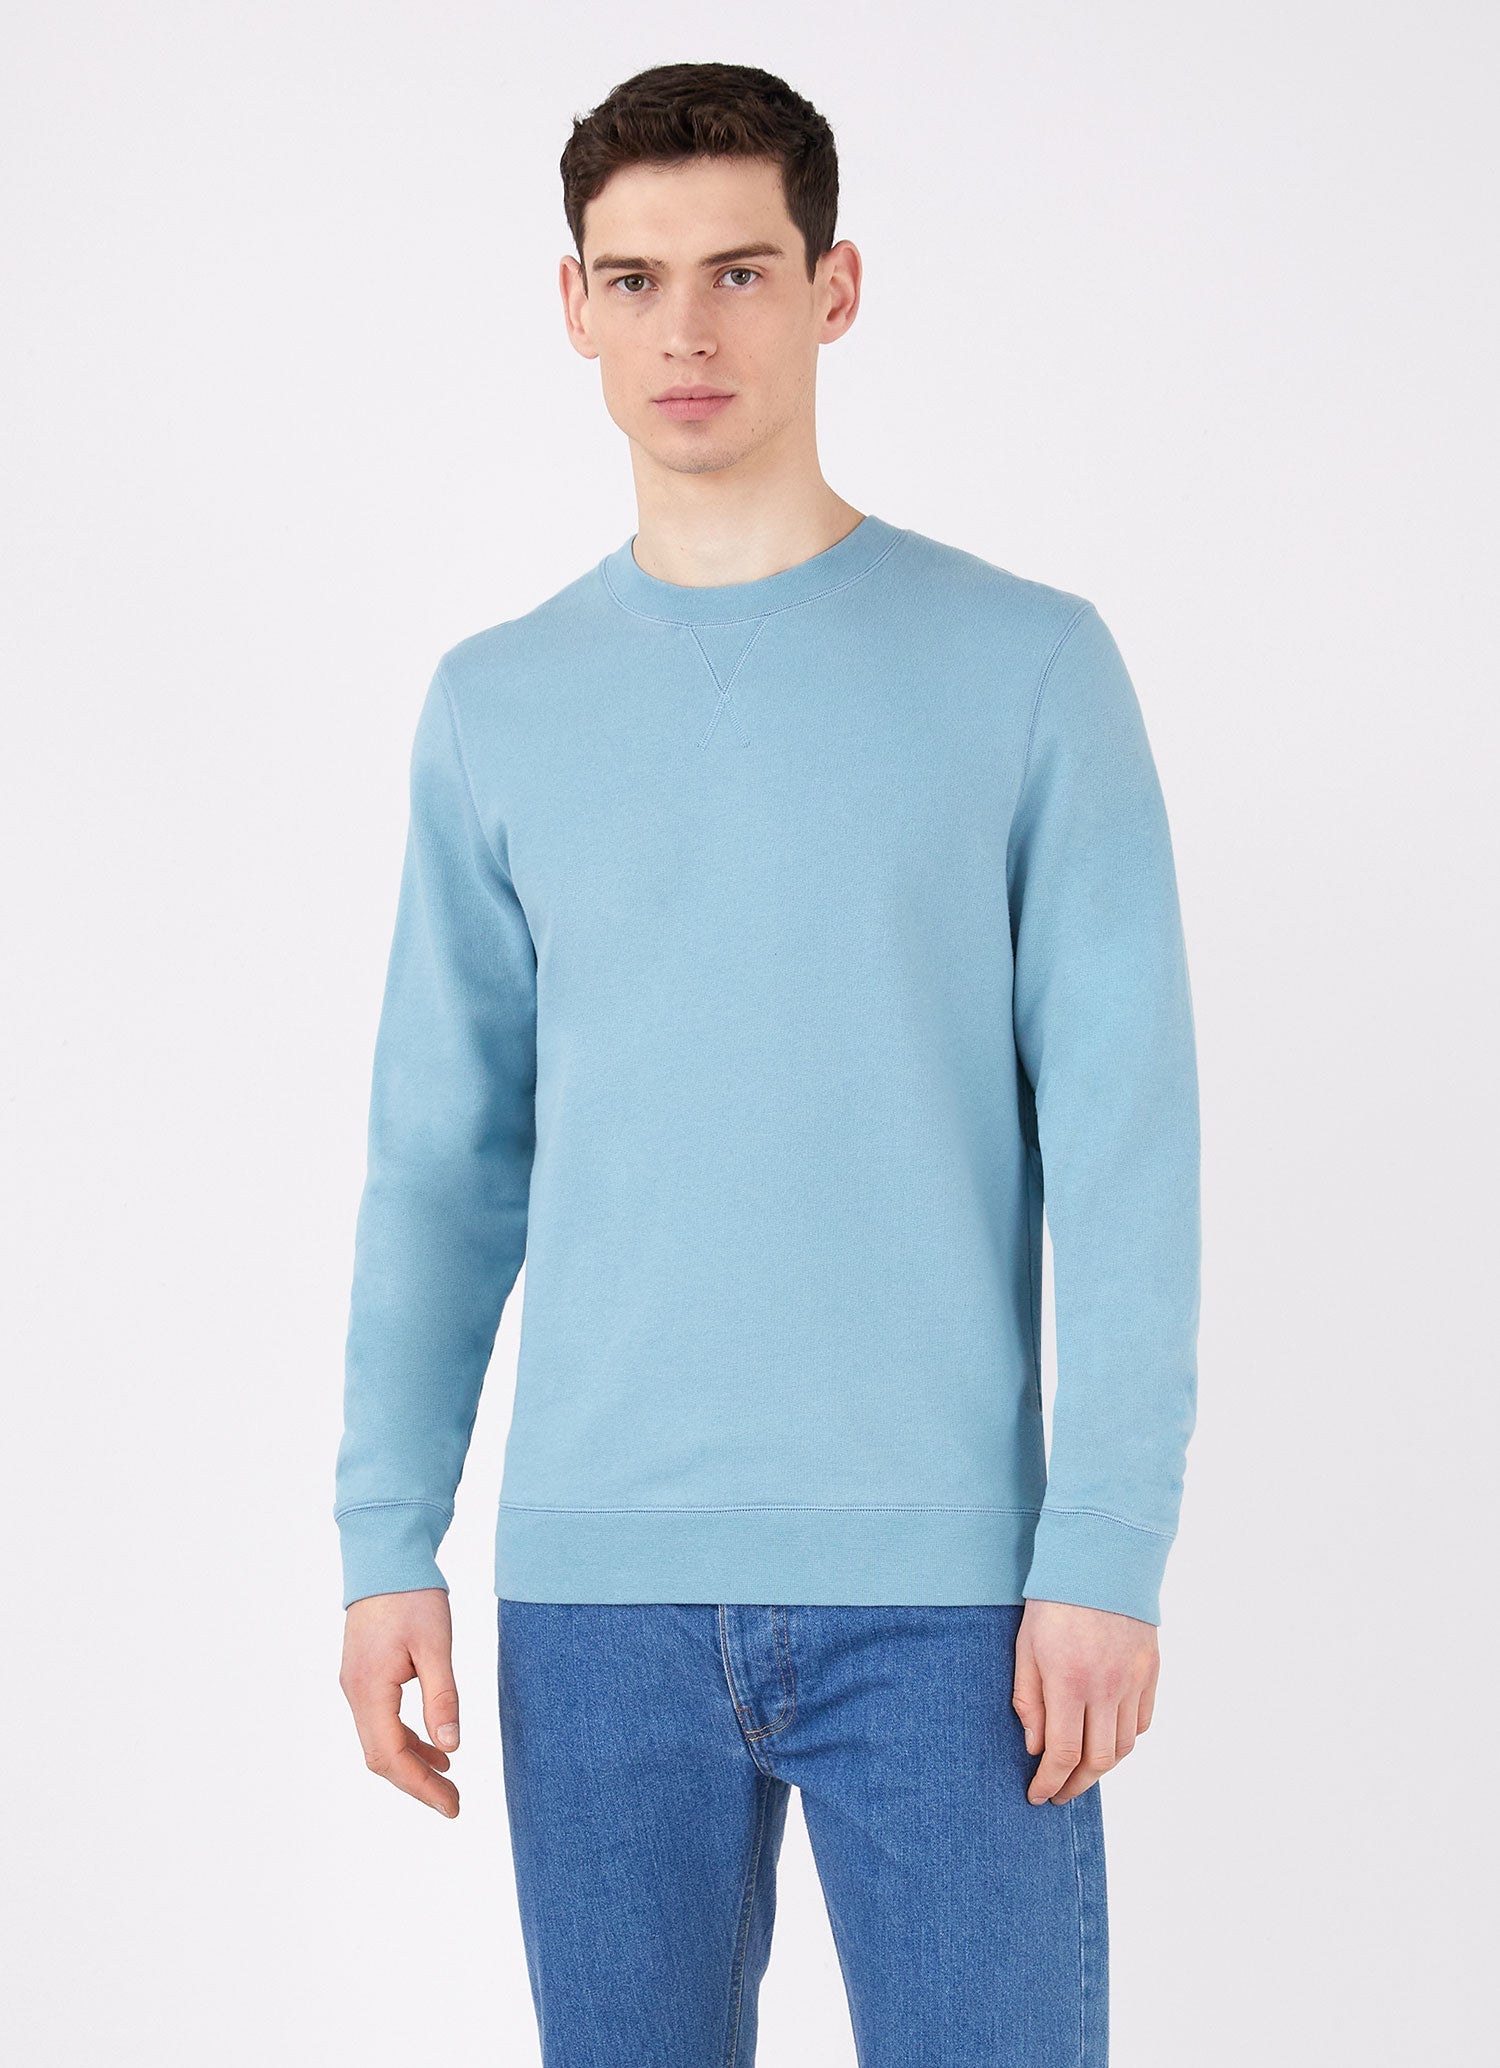 Men's Loopback Sweatshirt in Storm Blue